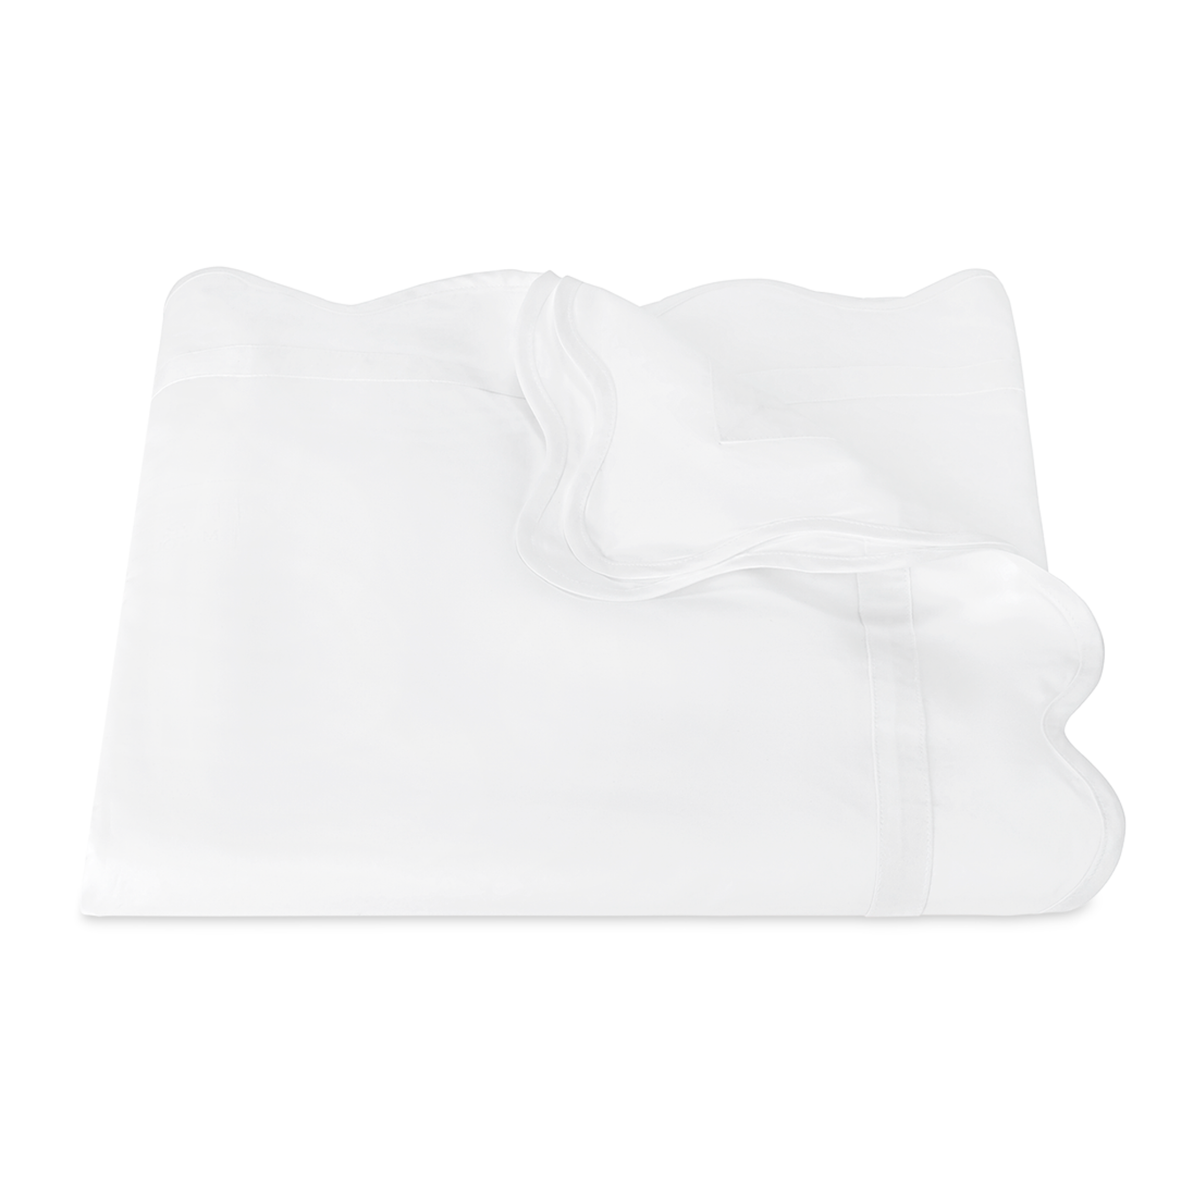 Folded Duvet Cover of Matouk Cornelia Bedding in White Color